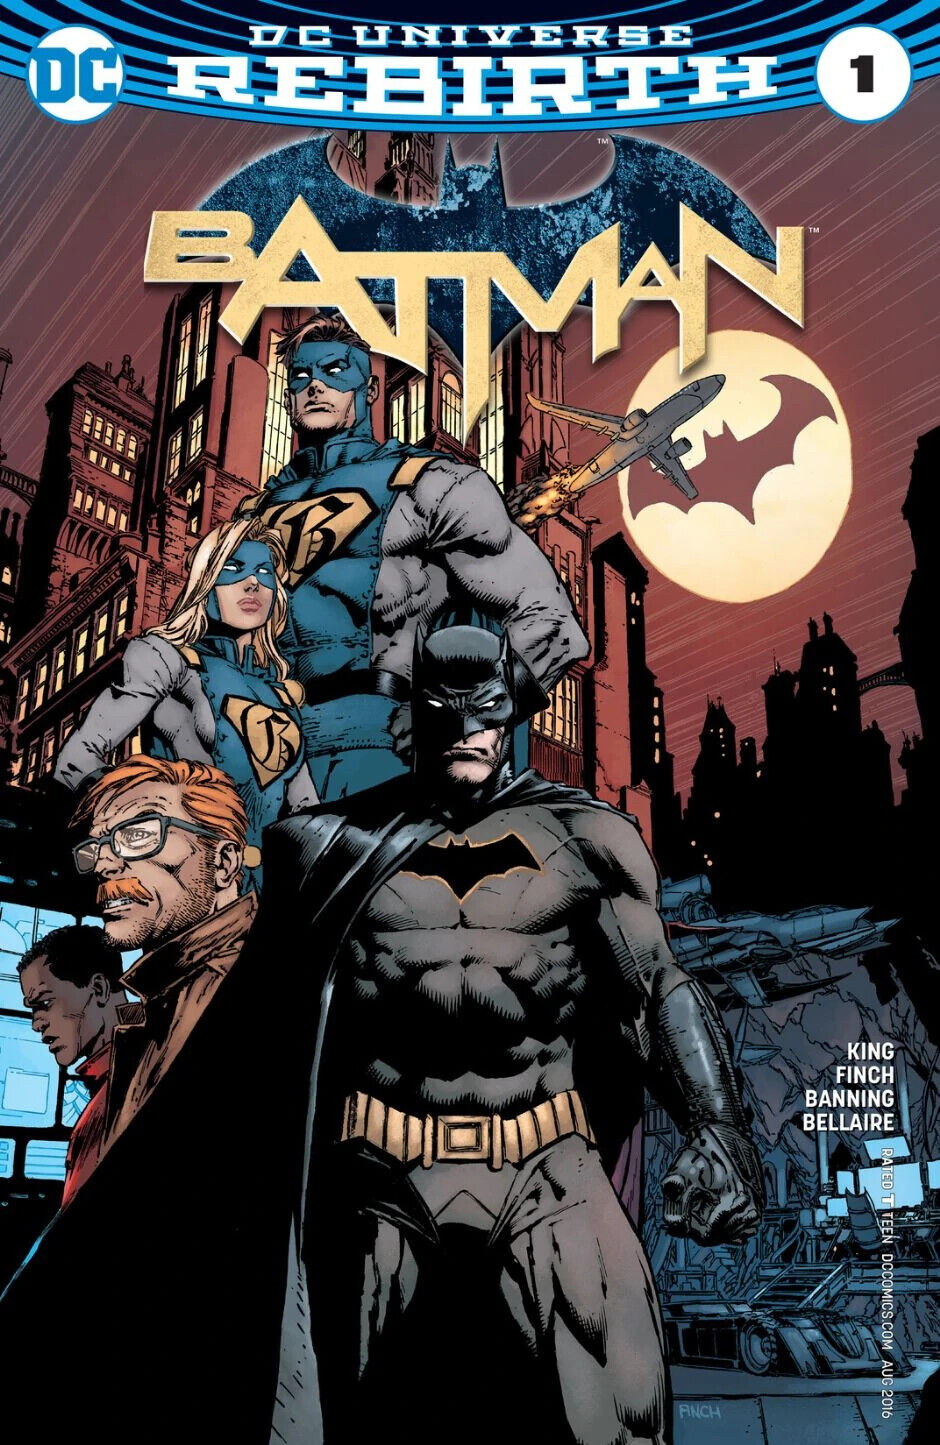 BATMAN VOL 3 #1-130 YOU PICK & CHOOSE ISSUES DC UNIVERSE REBIRTH 2016 MODERN AGE